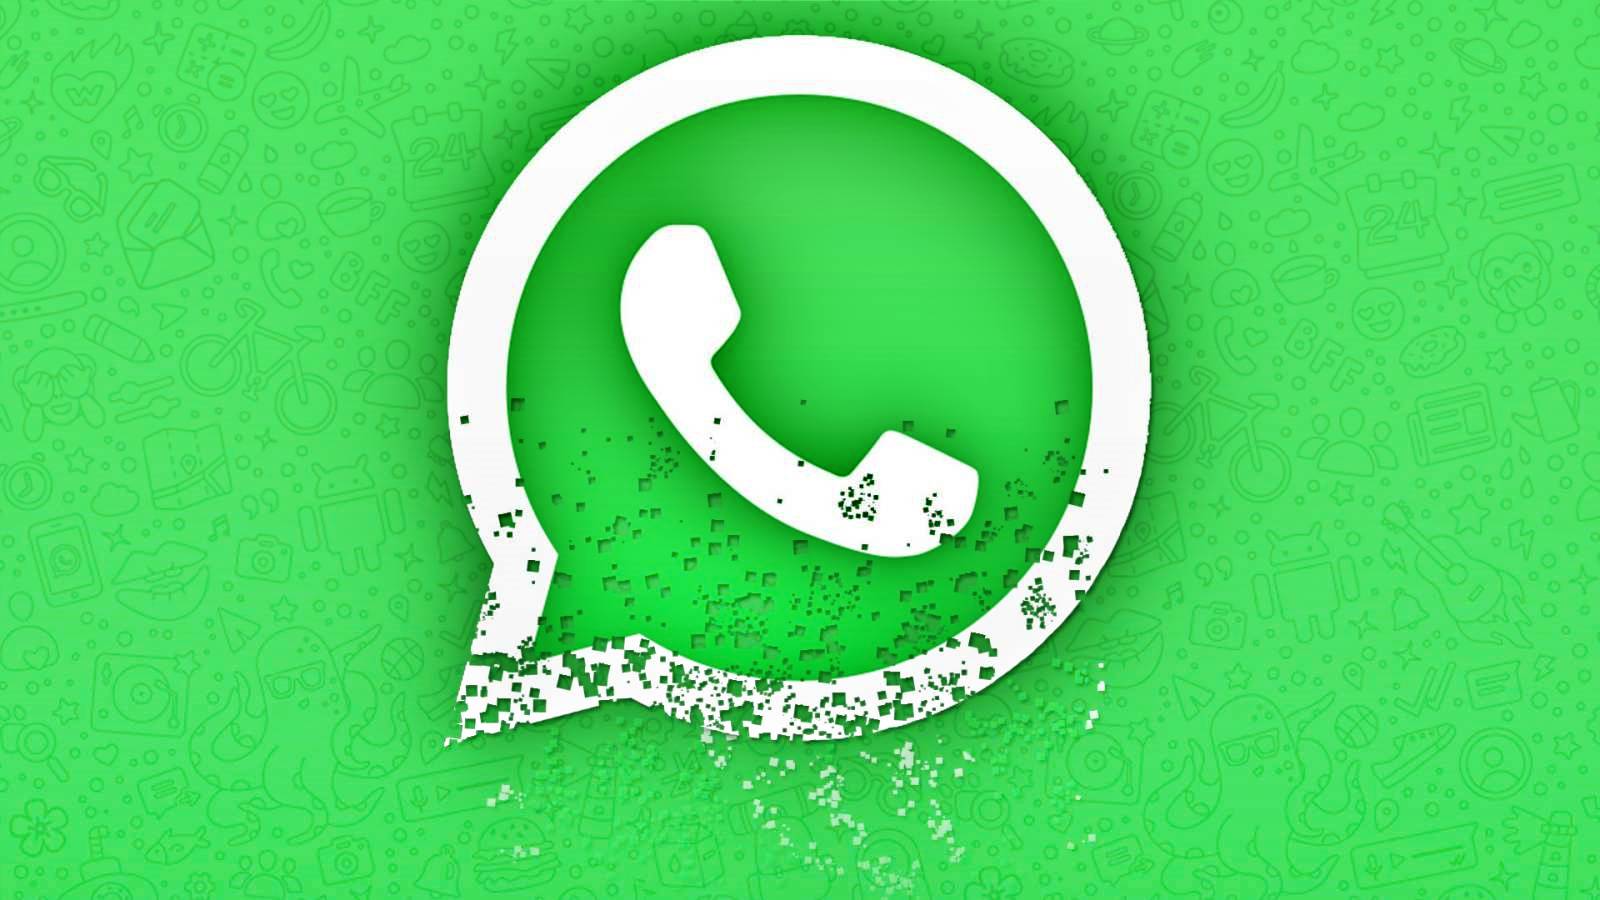 WhatsApp LANSAT Schimbare Importanta Toate iPhone Android